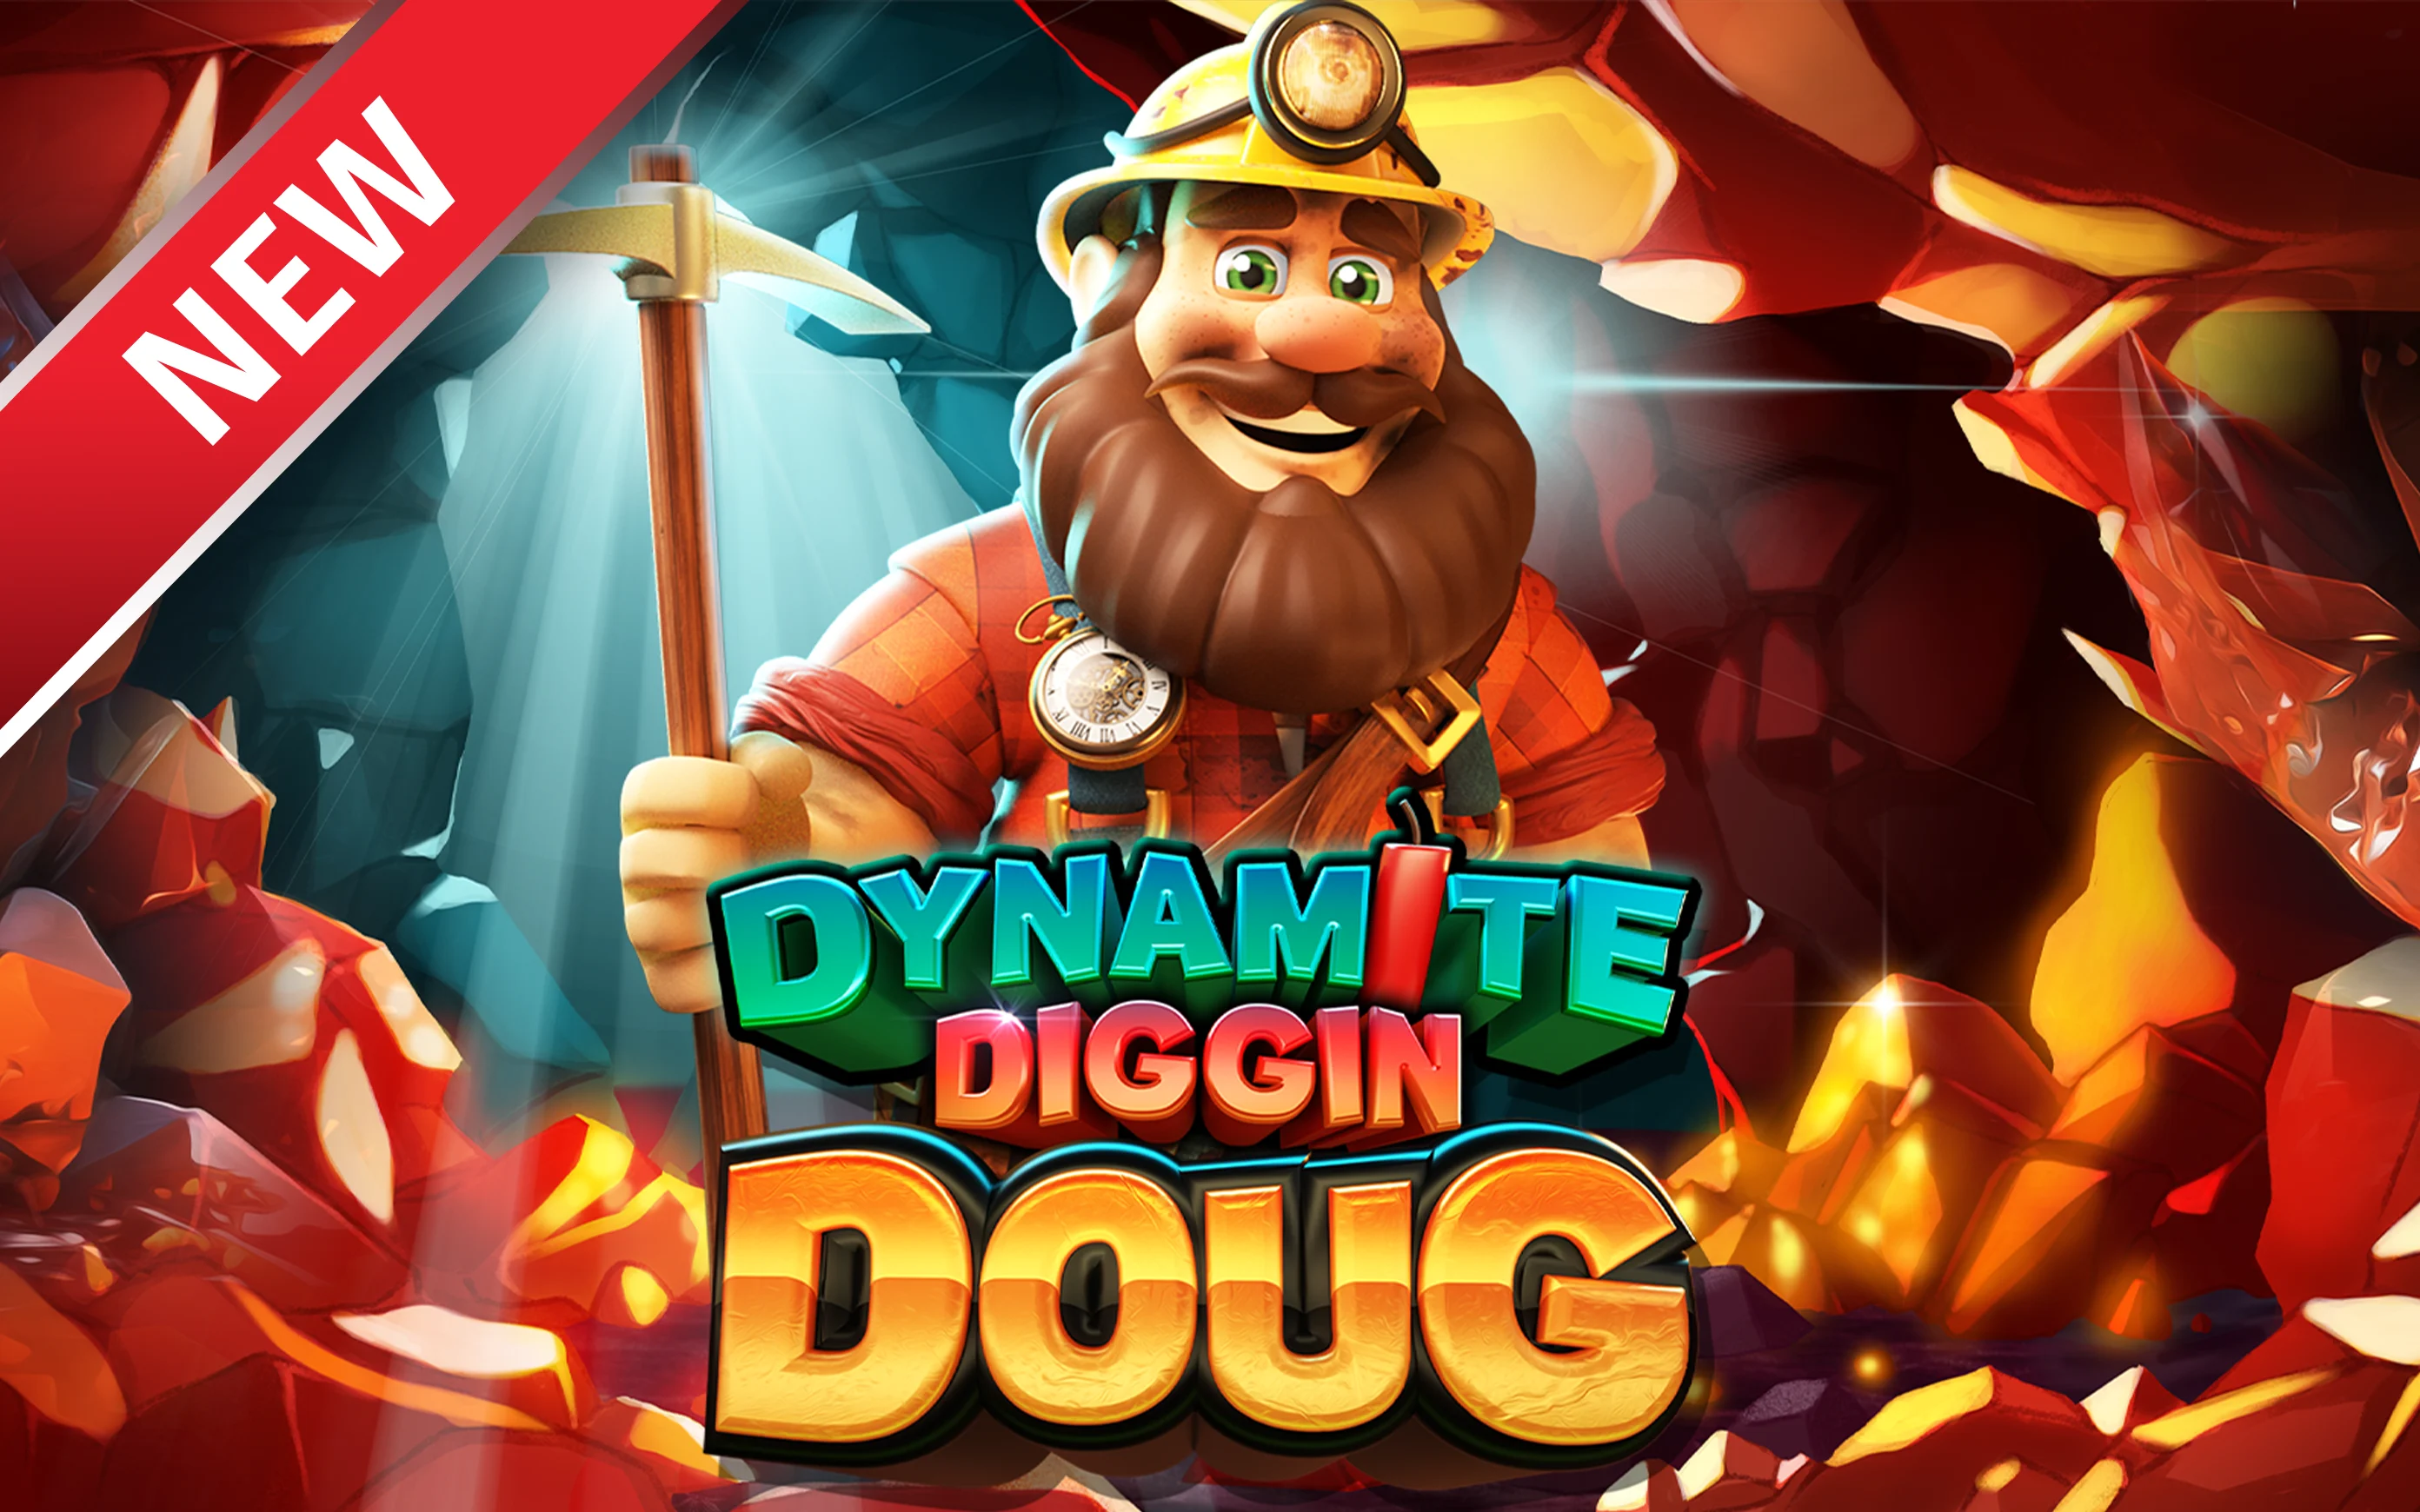 Play Dynamite Diggin Doug on Starcasino.be online casino